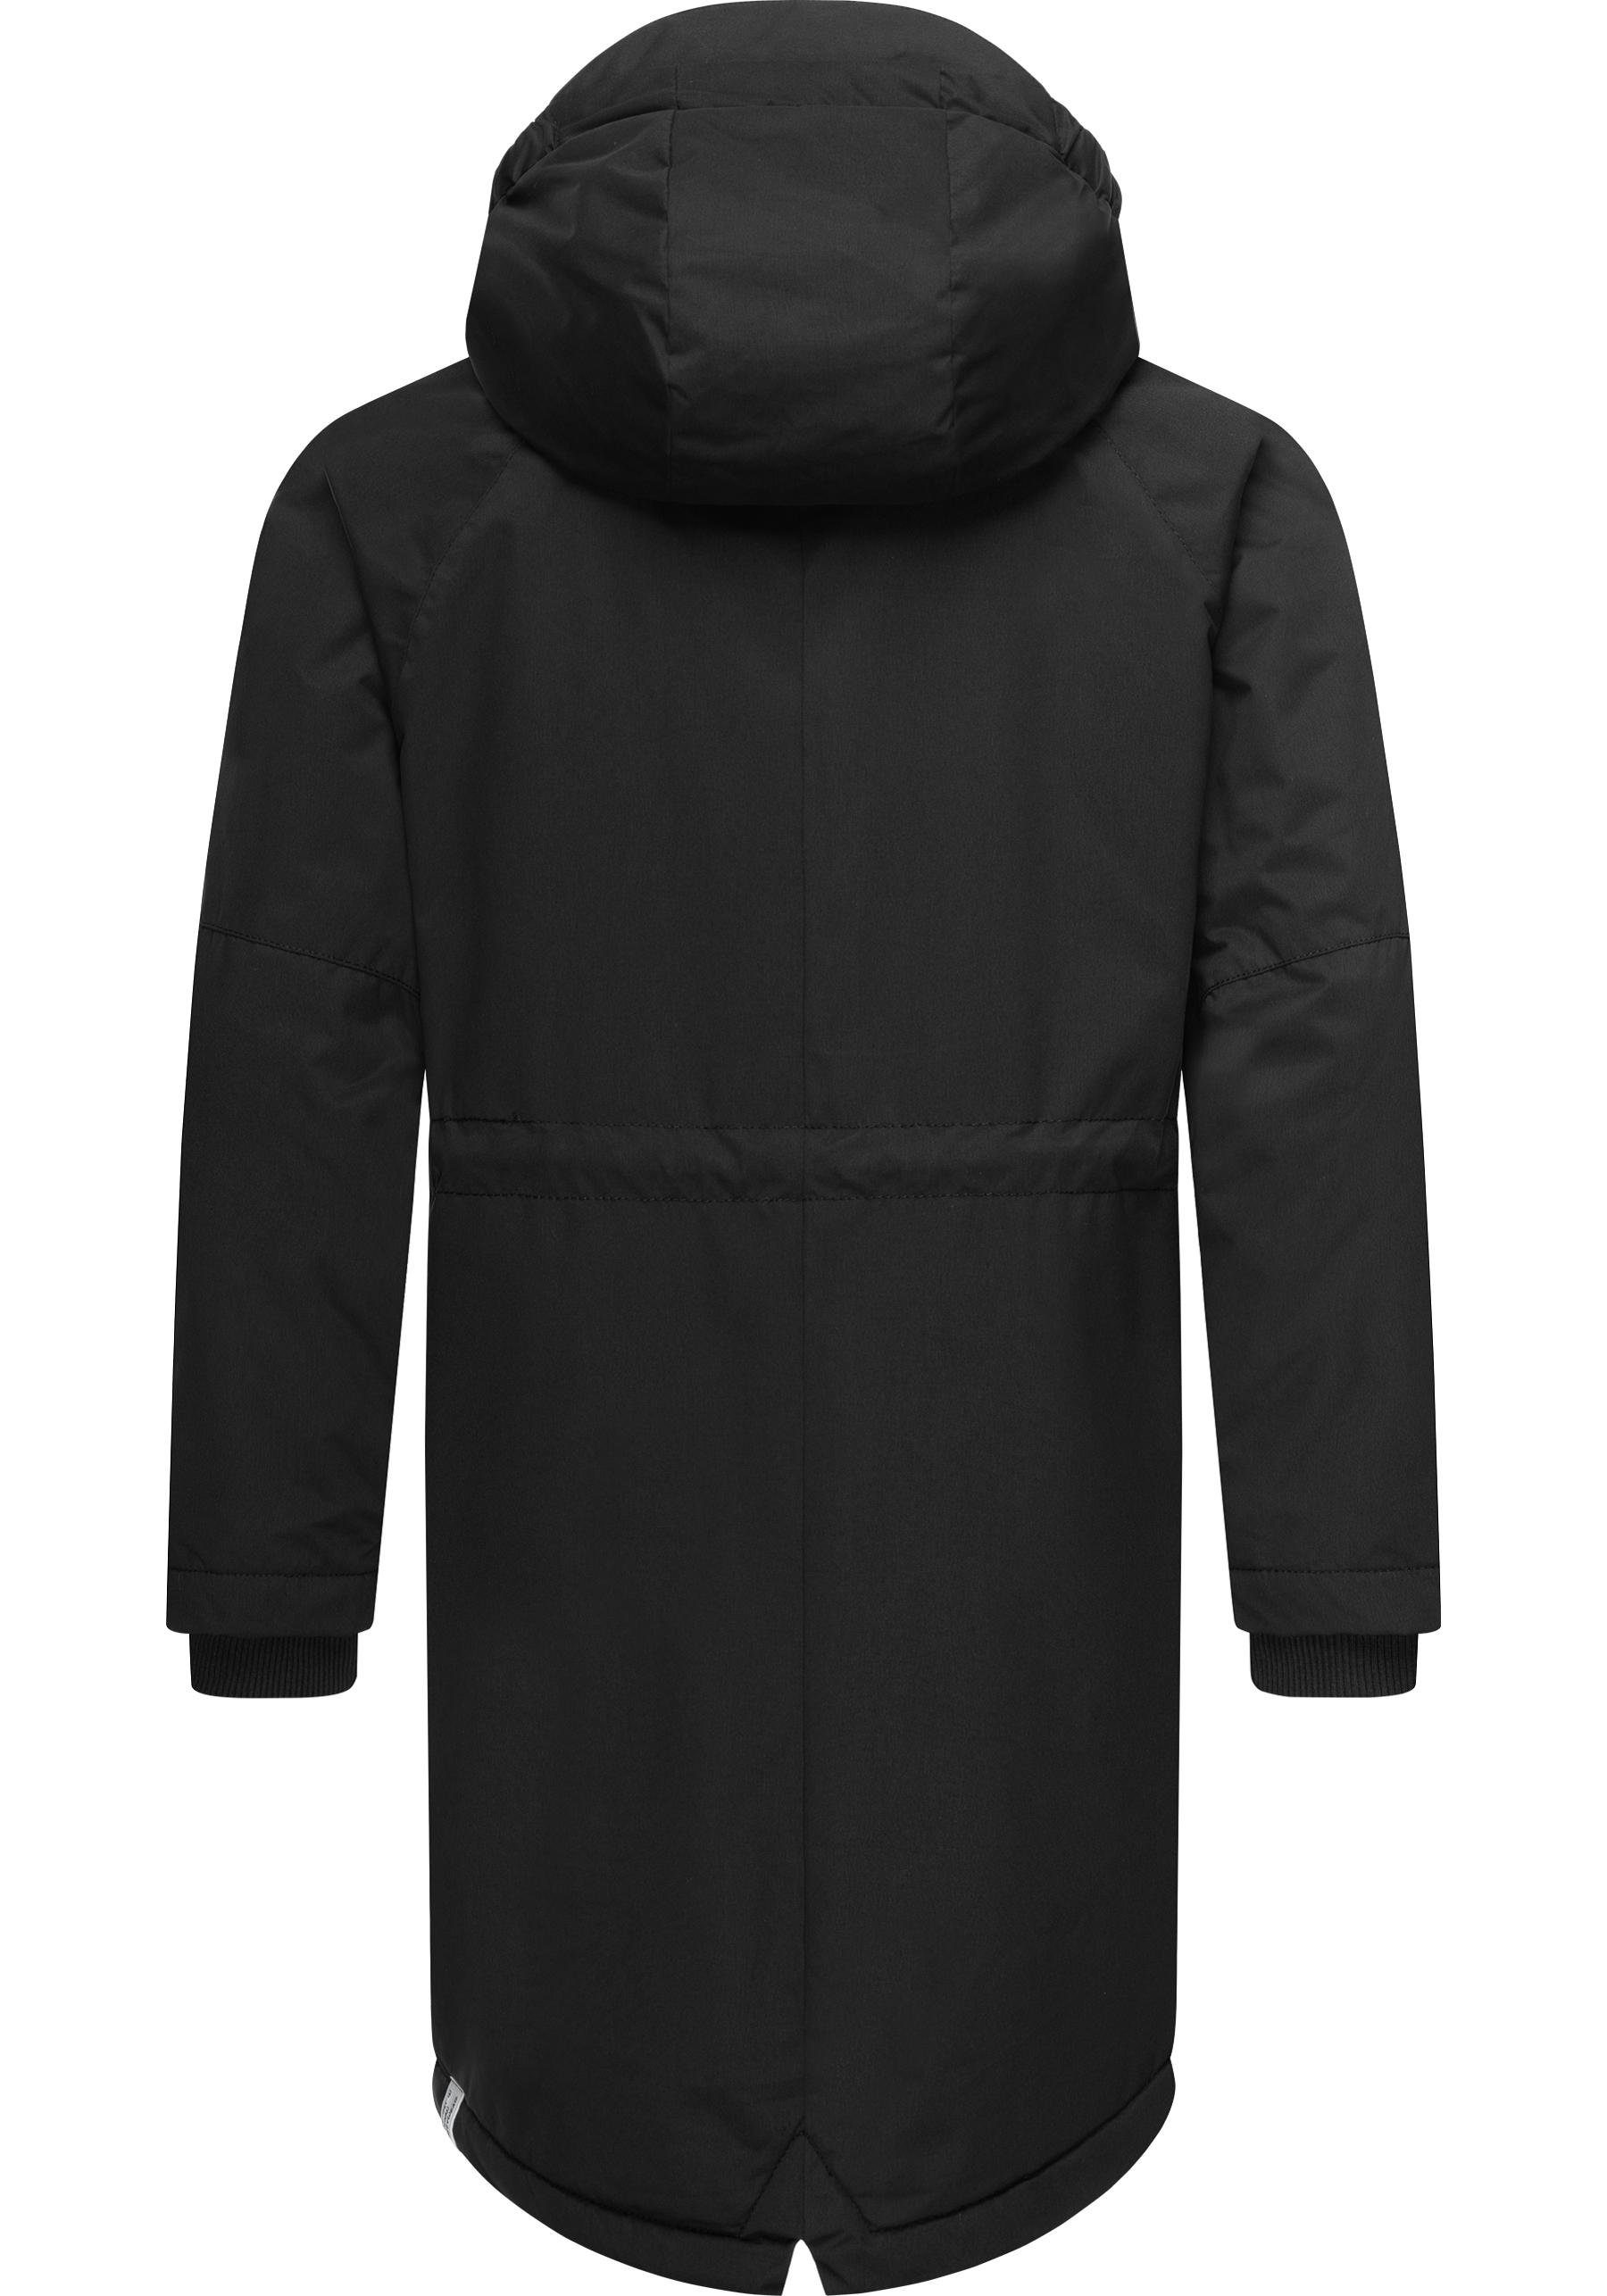 warmem Uniparka Teddyfell-Innenfutter schwarz Jacke Ragwear Winterjacke B mit flauschig